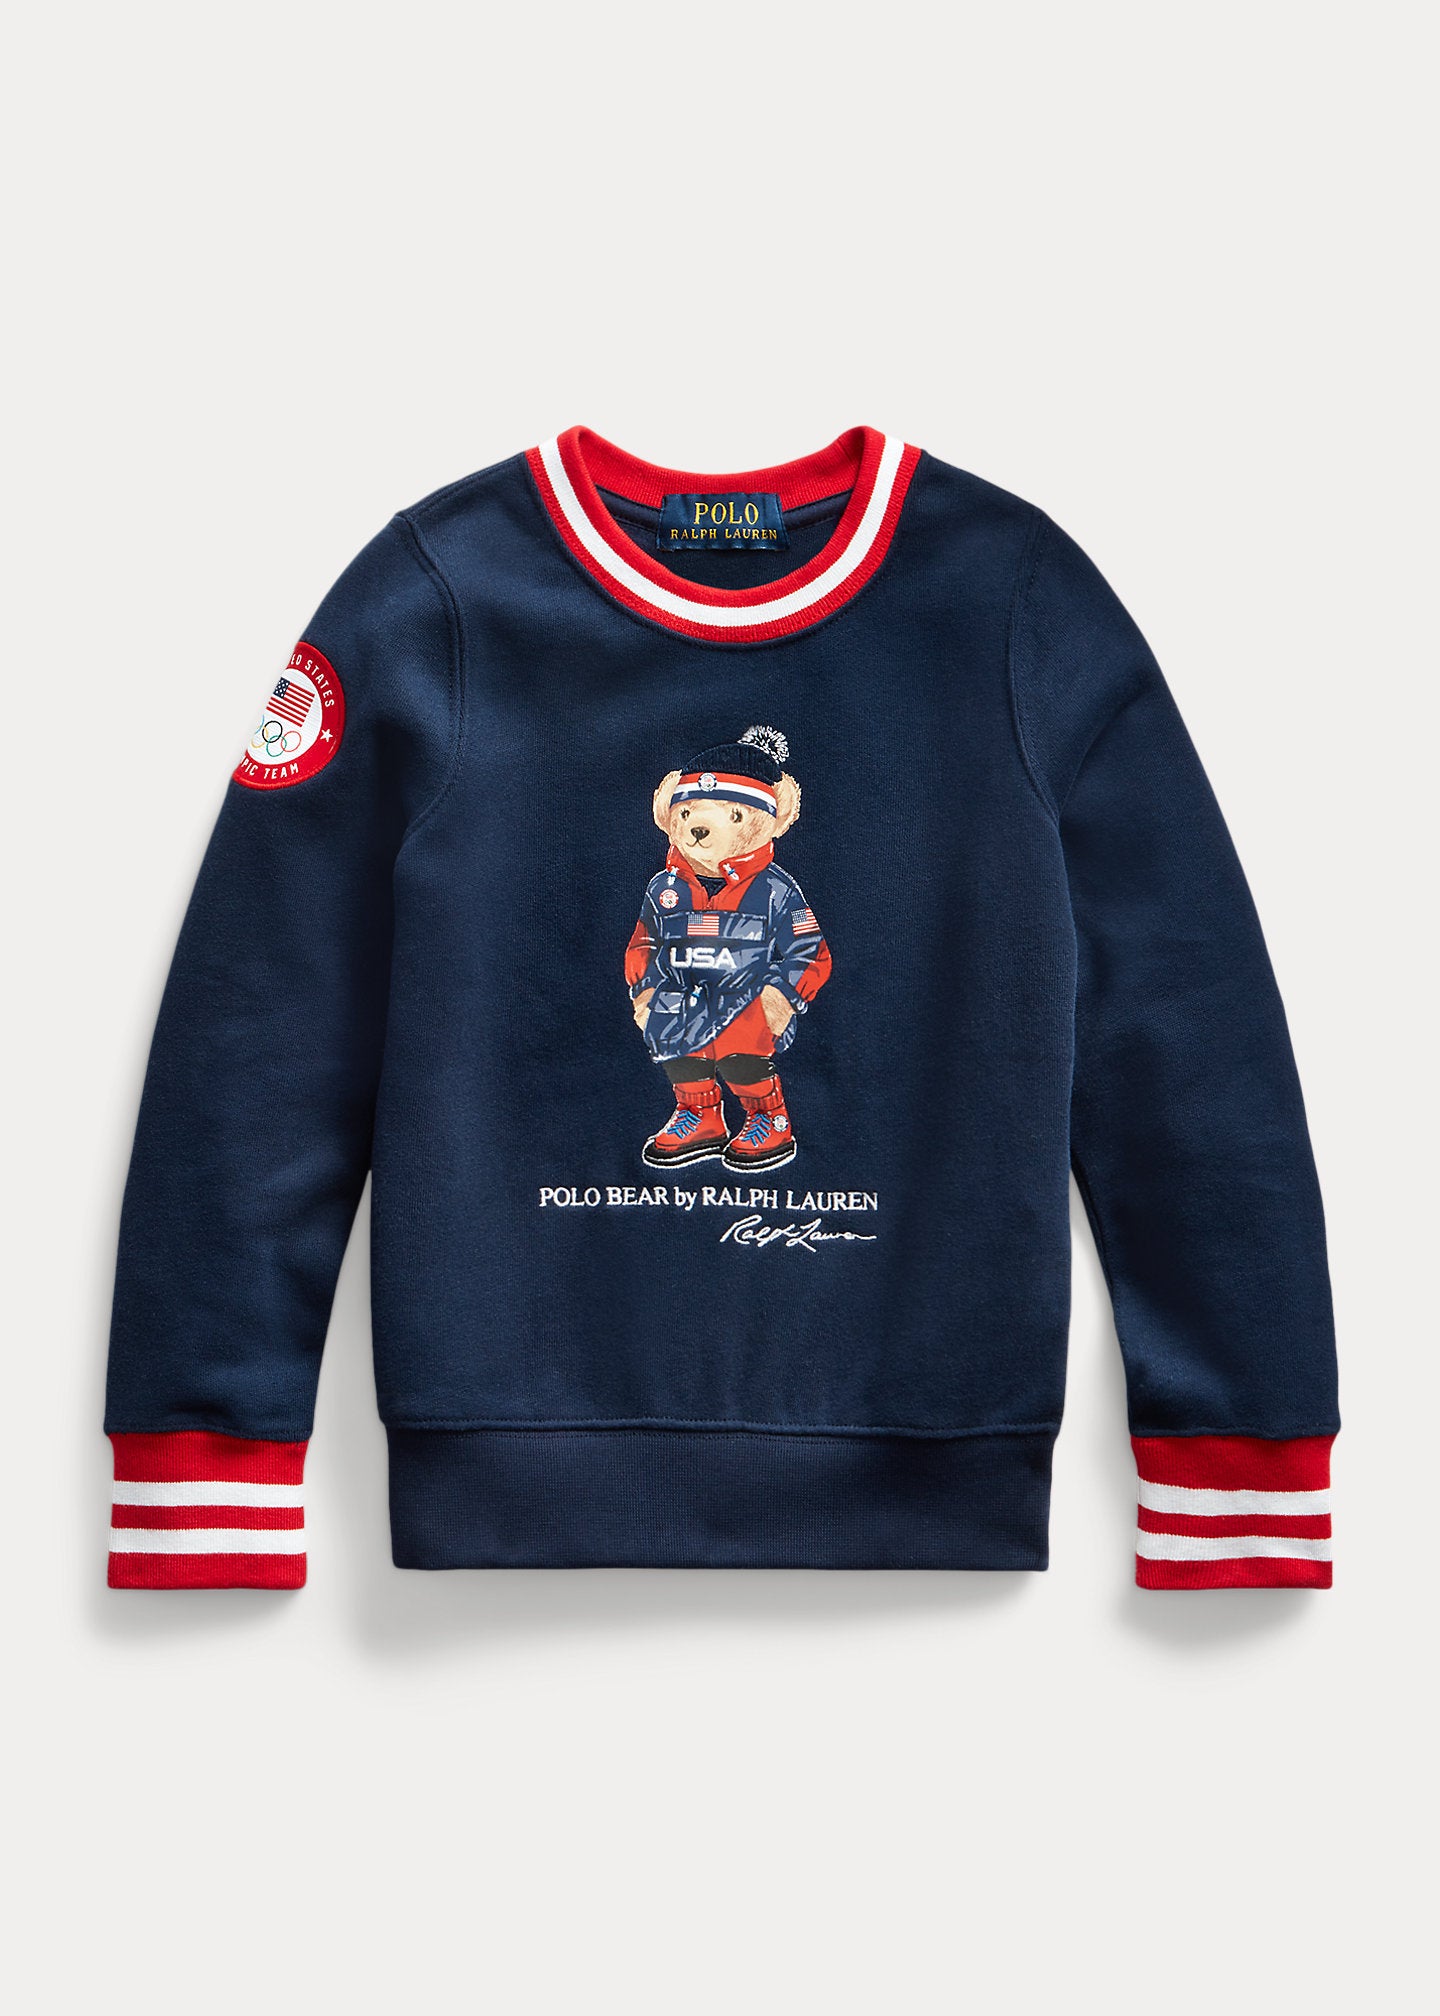 Ralph Lauren Team USA Polo Bear Sweatshirt